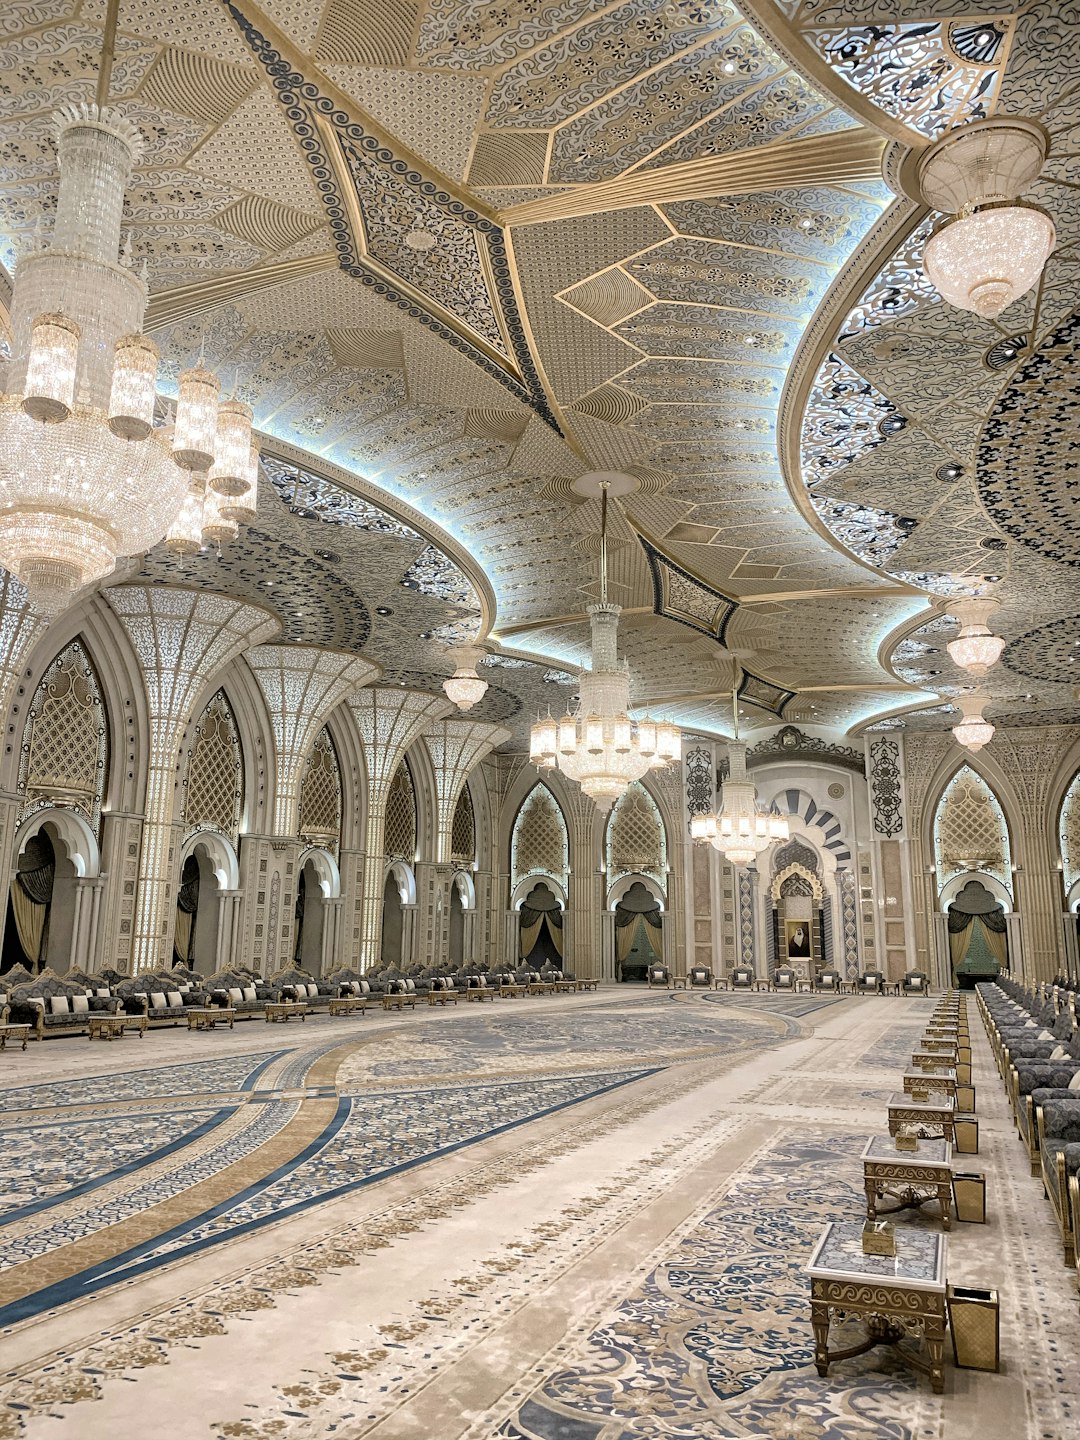 Place of worship photo spot Abu Dhabi Sheikh Zayed Grand Mosque Center